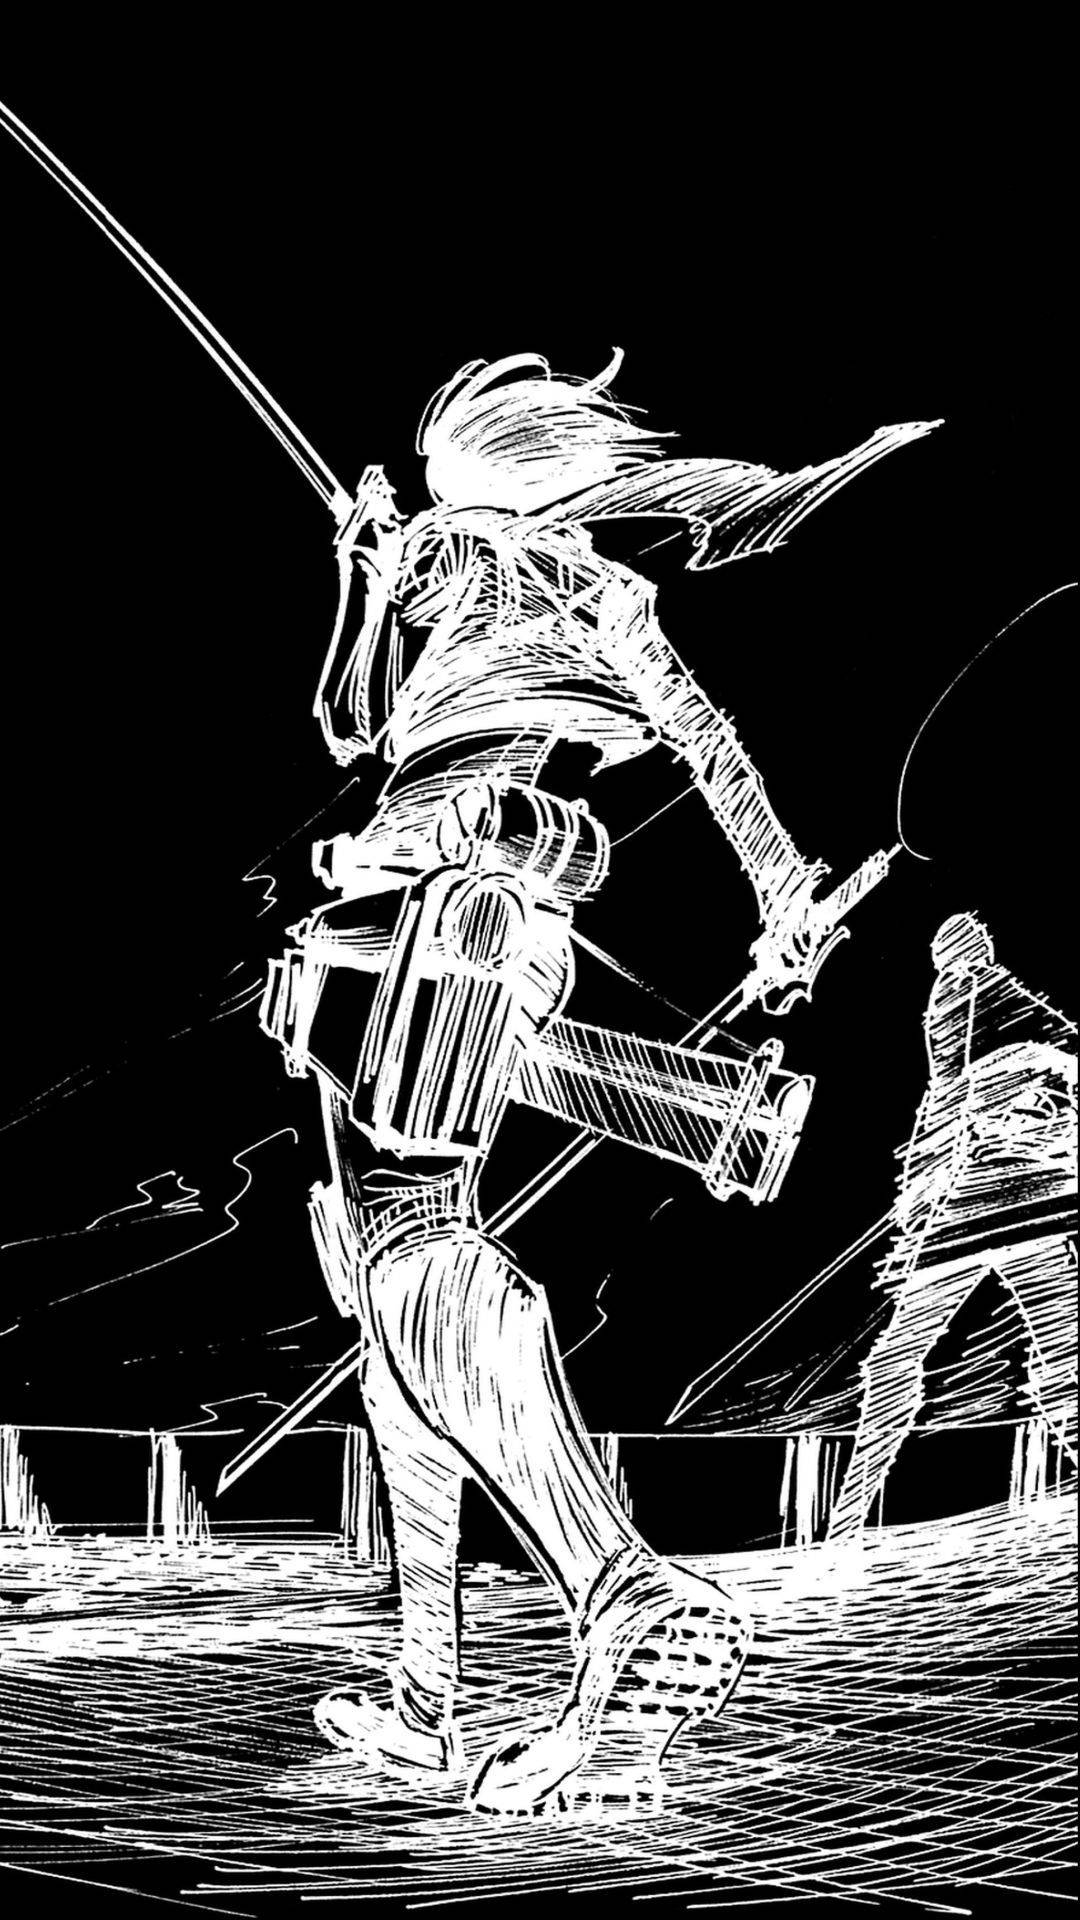 Mikasa Sketch Angreb på Titan iPhone Wallpaper Wallpaper